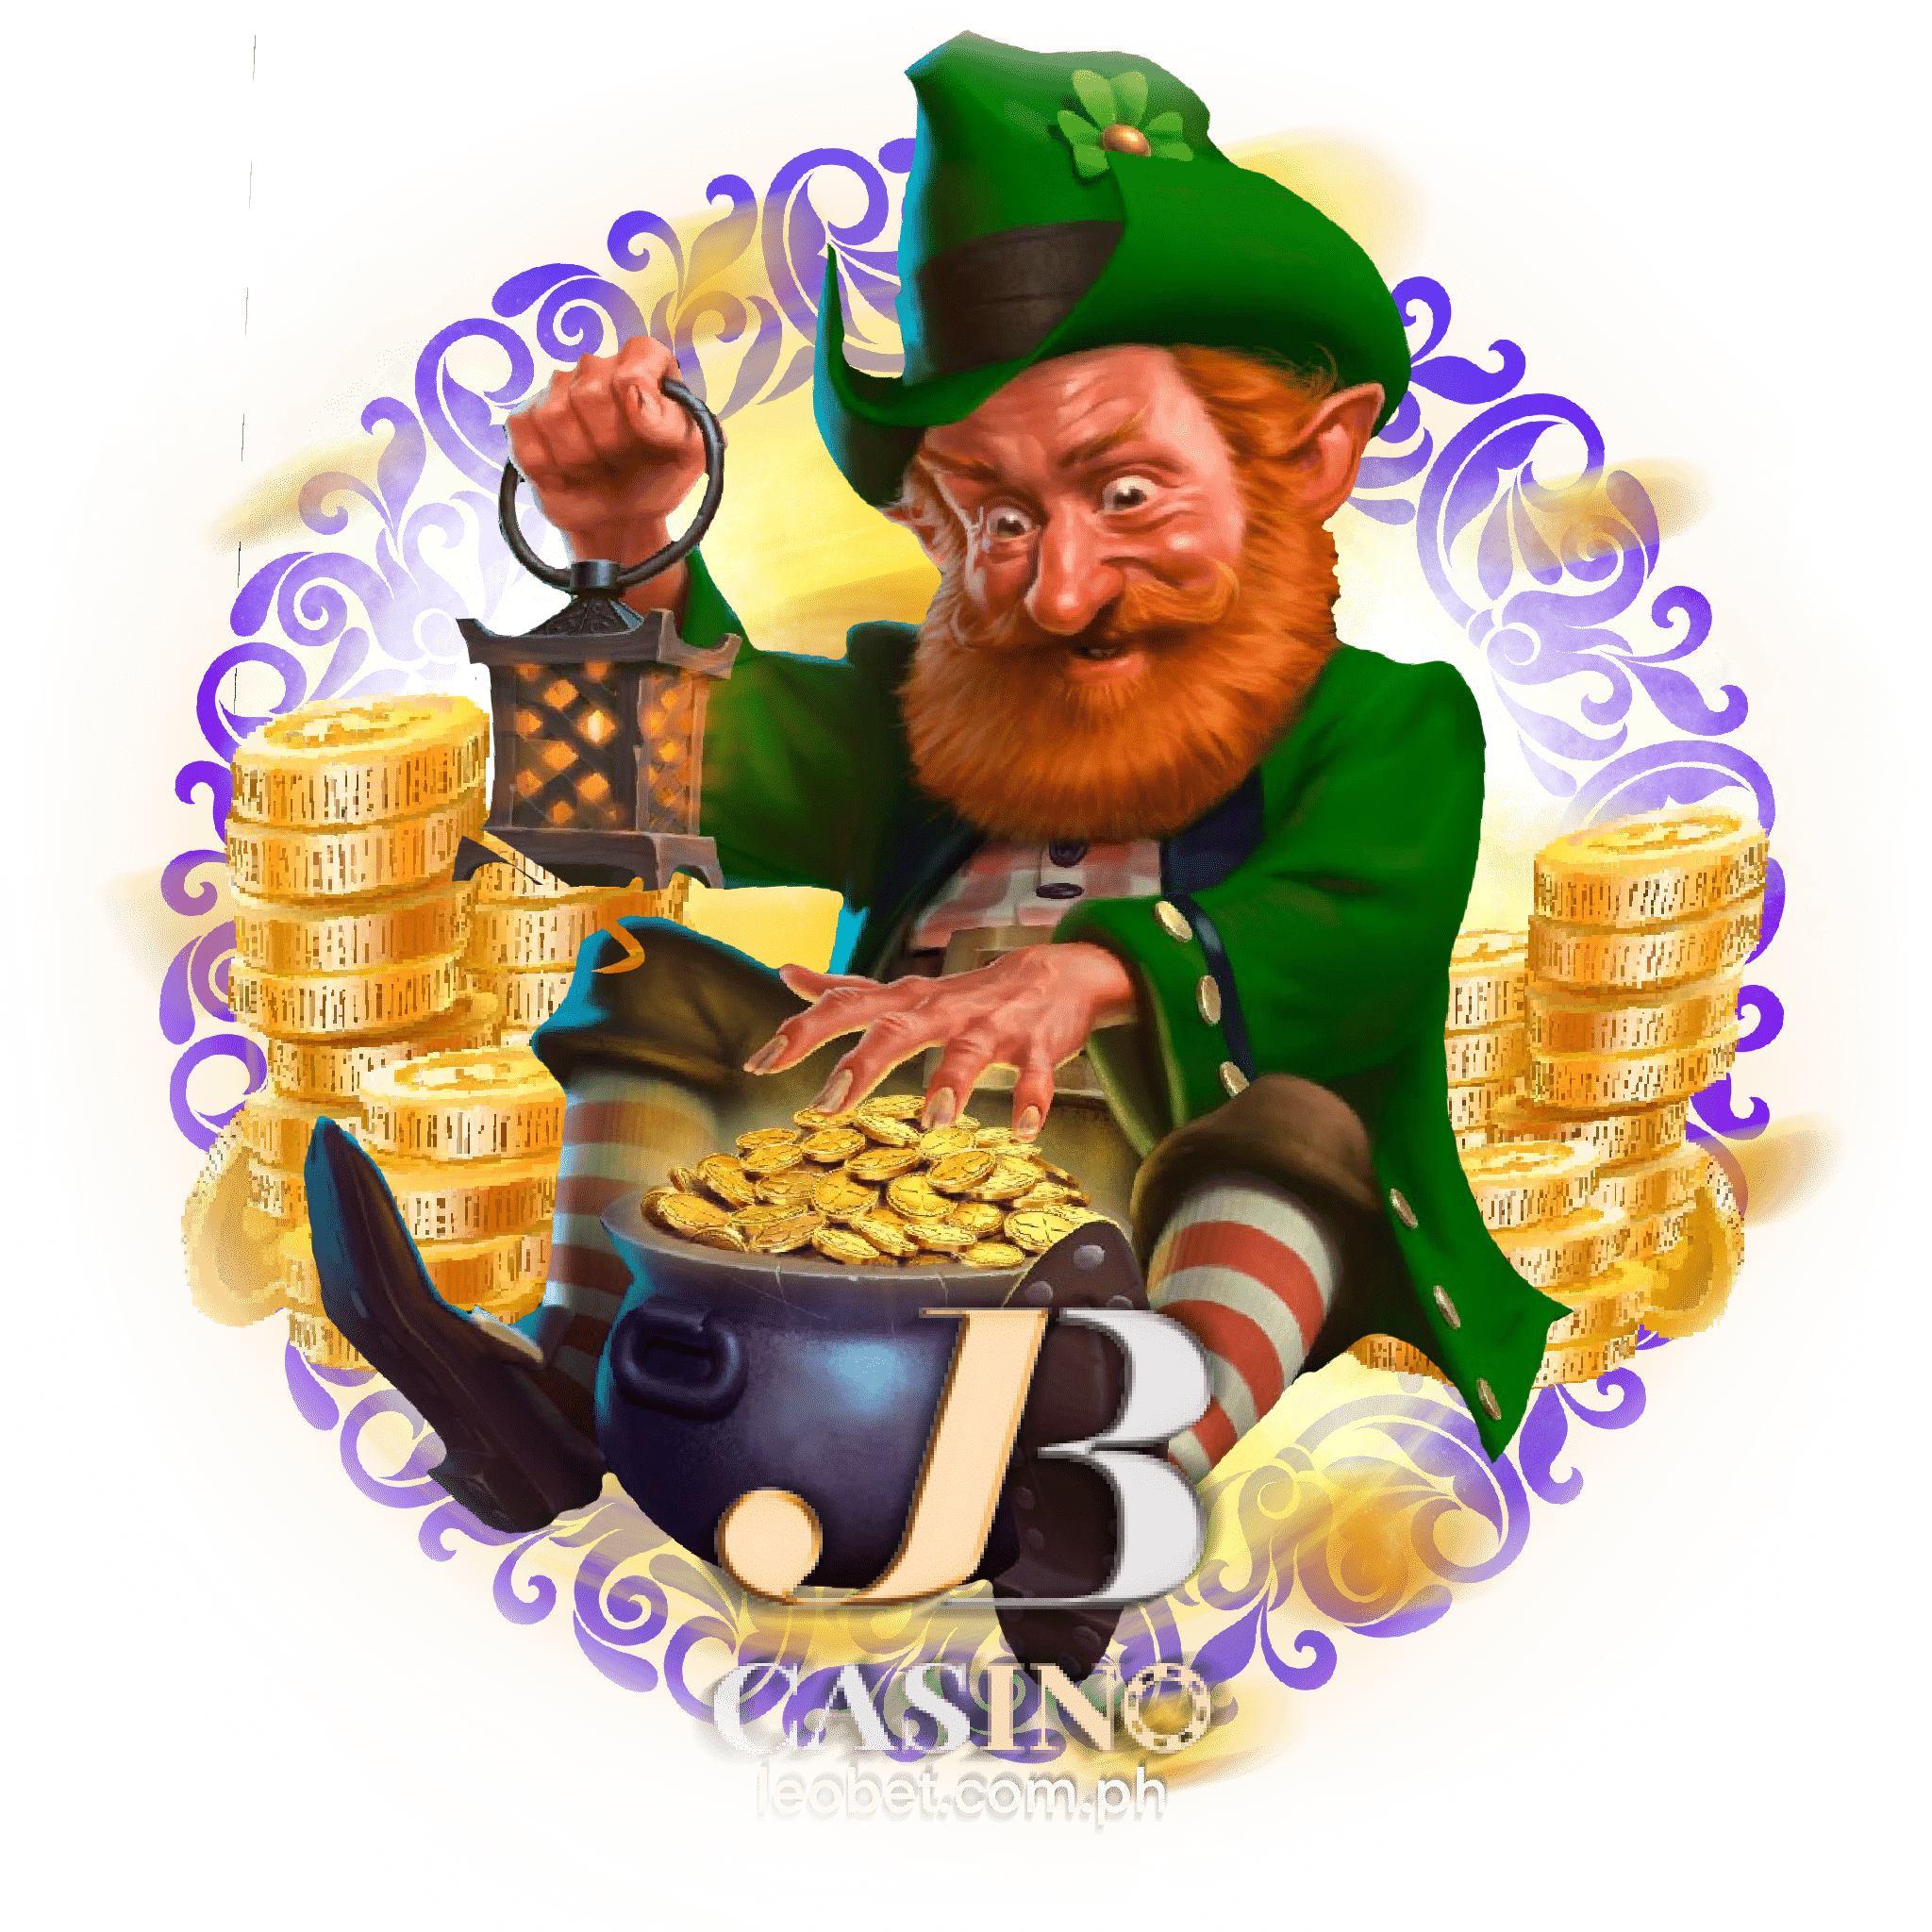 Leobet online casino